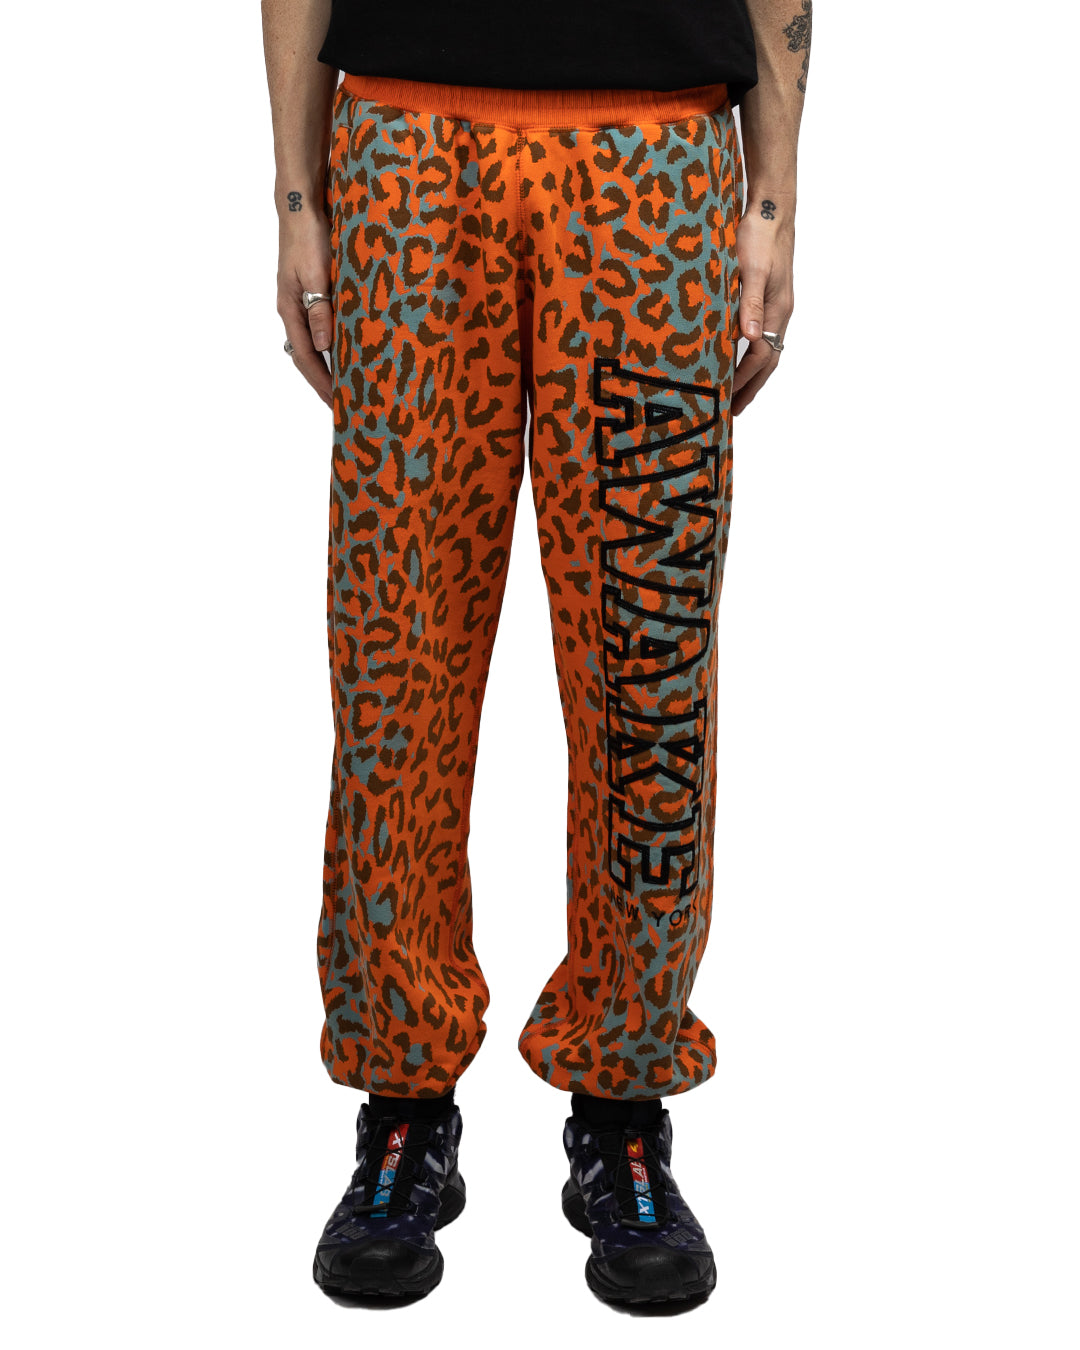 Awake NY Military Logo Embroidered Sweatpants Printed Leopard